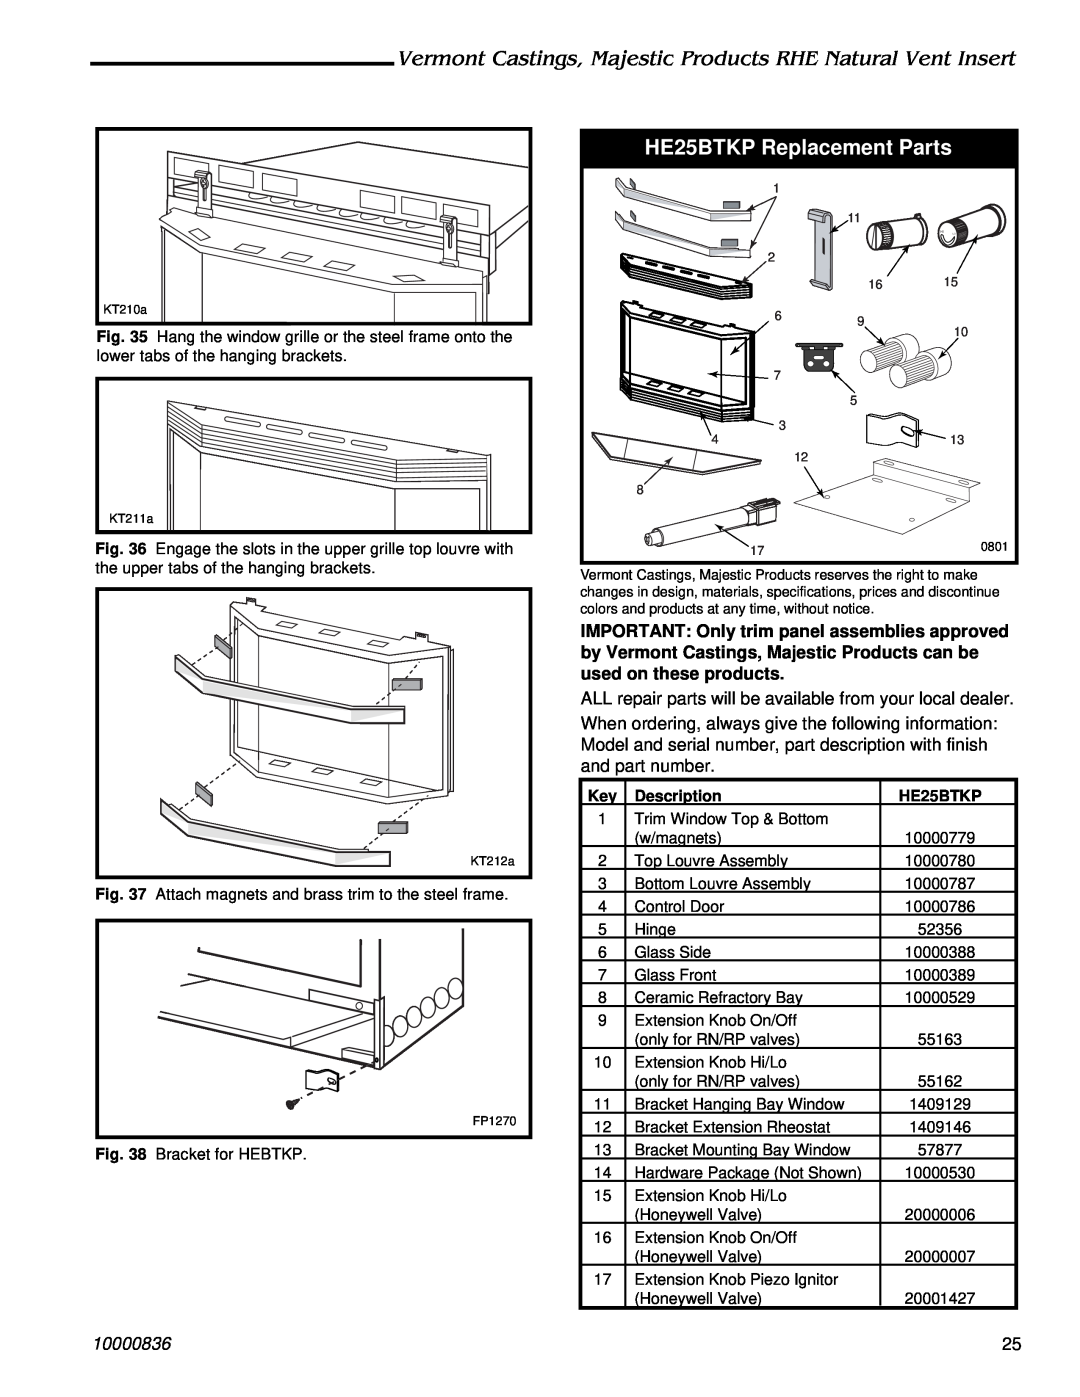 Vermont Casting RHE25, RHE42, RHE32 installation instructions HE25BTKP Replacement Parts, 10000836, Description 